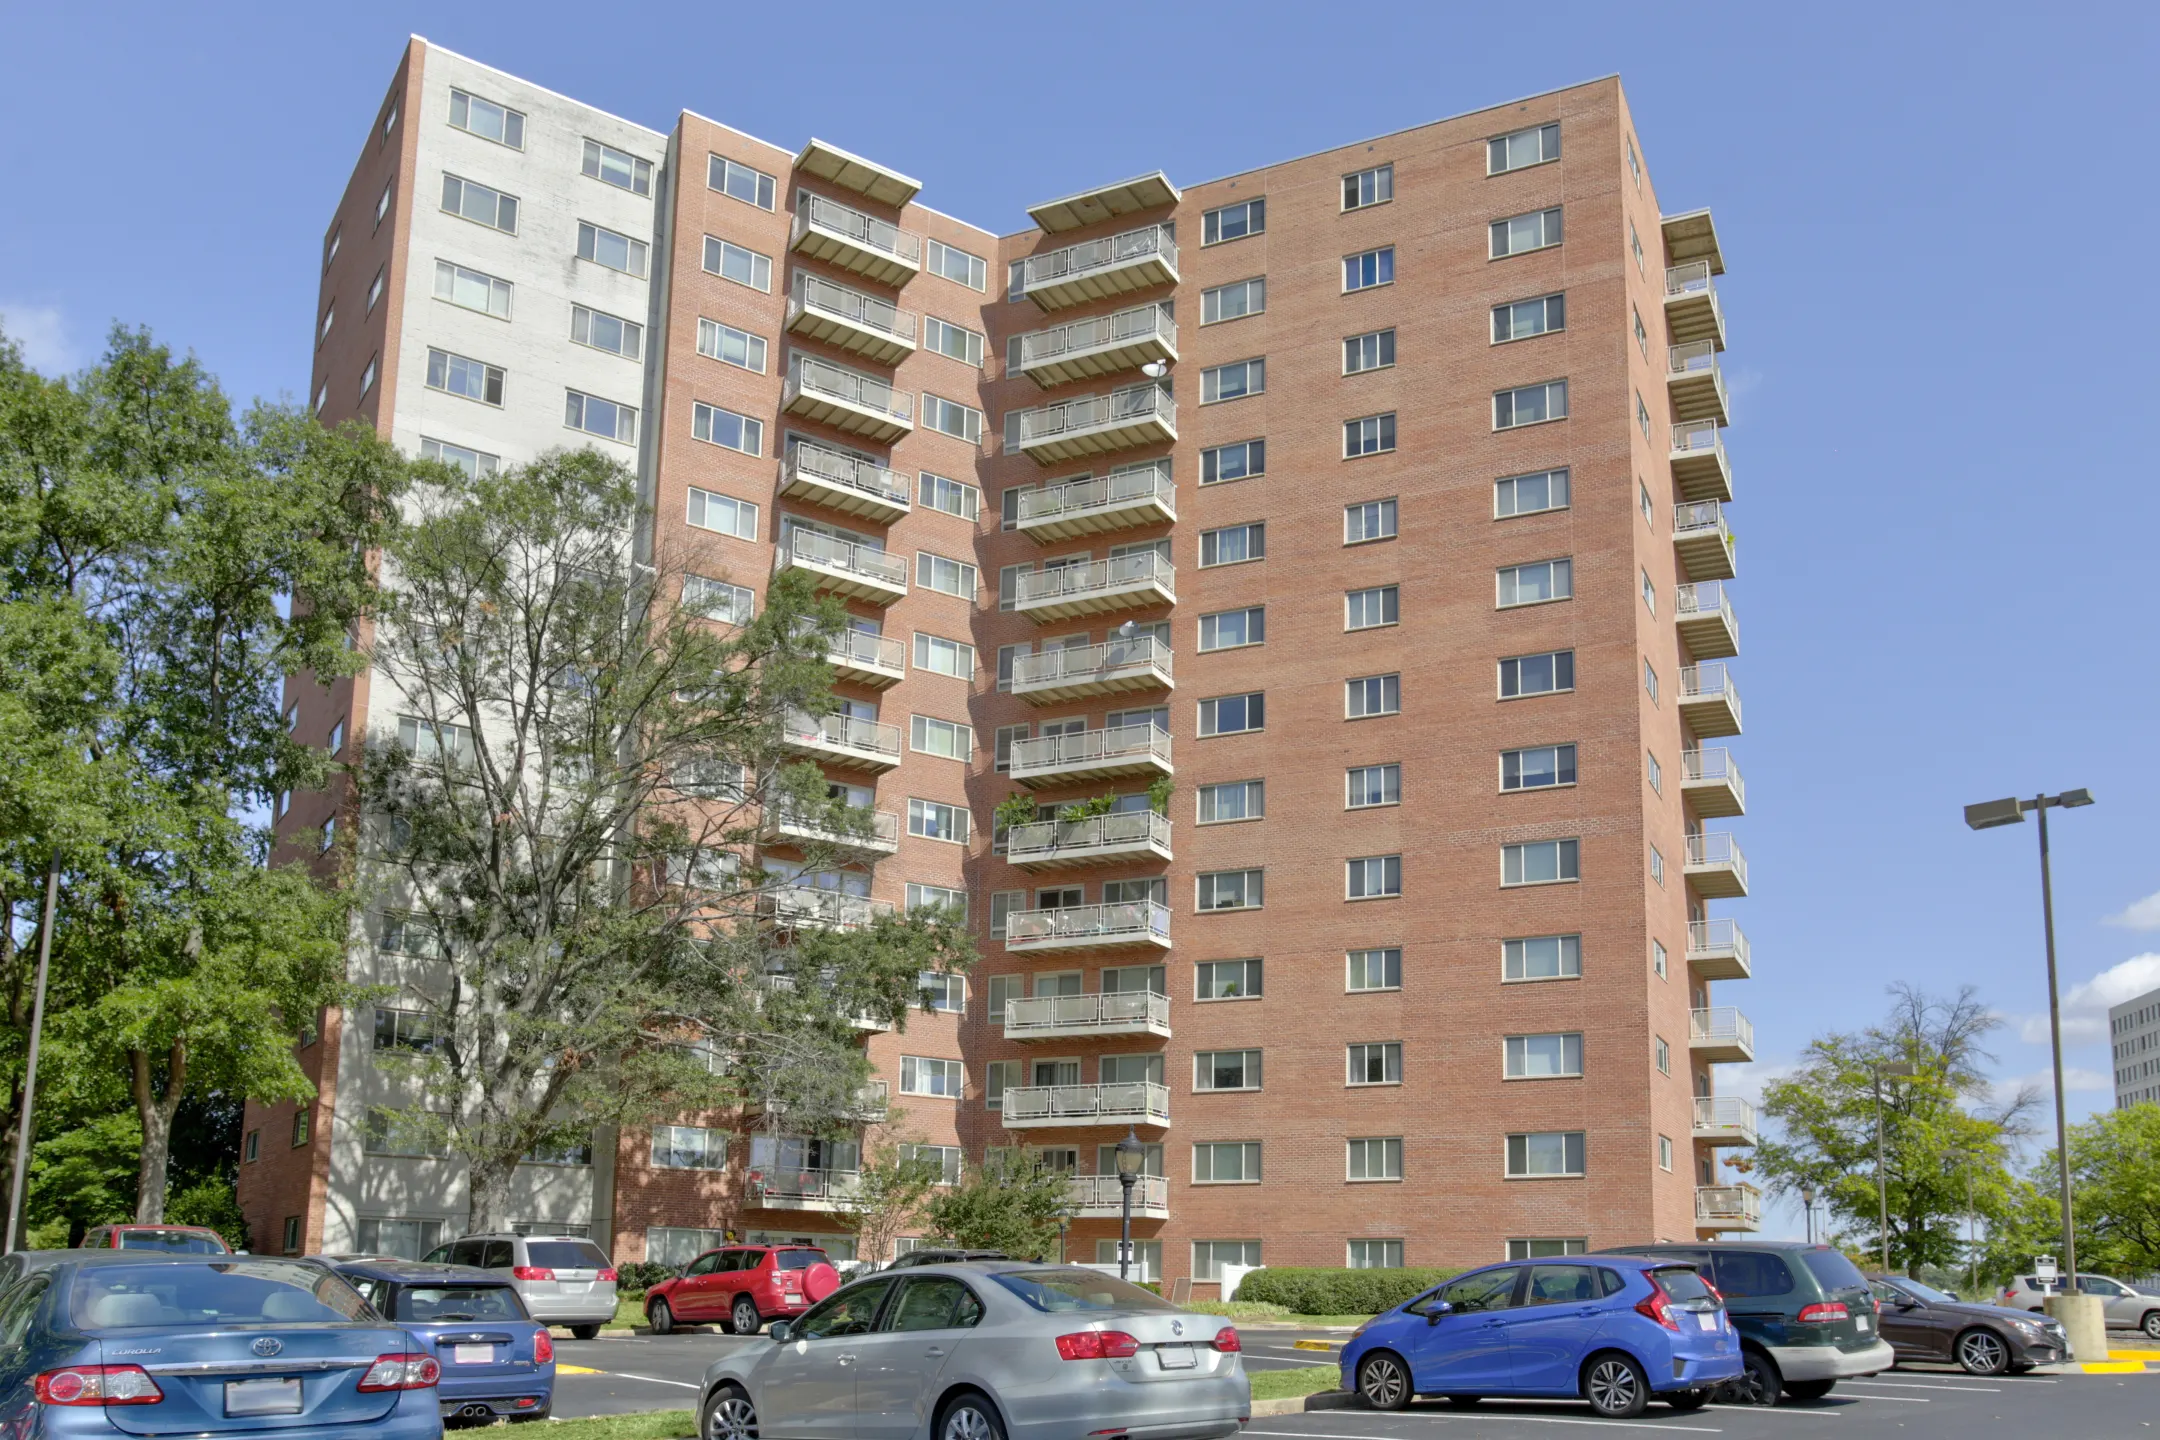 Building - Seminary Towers Apartments - Alexandria, VA